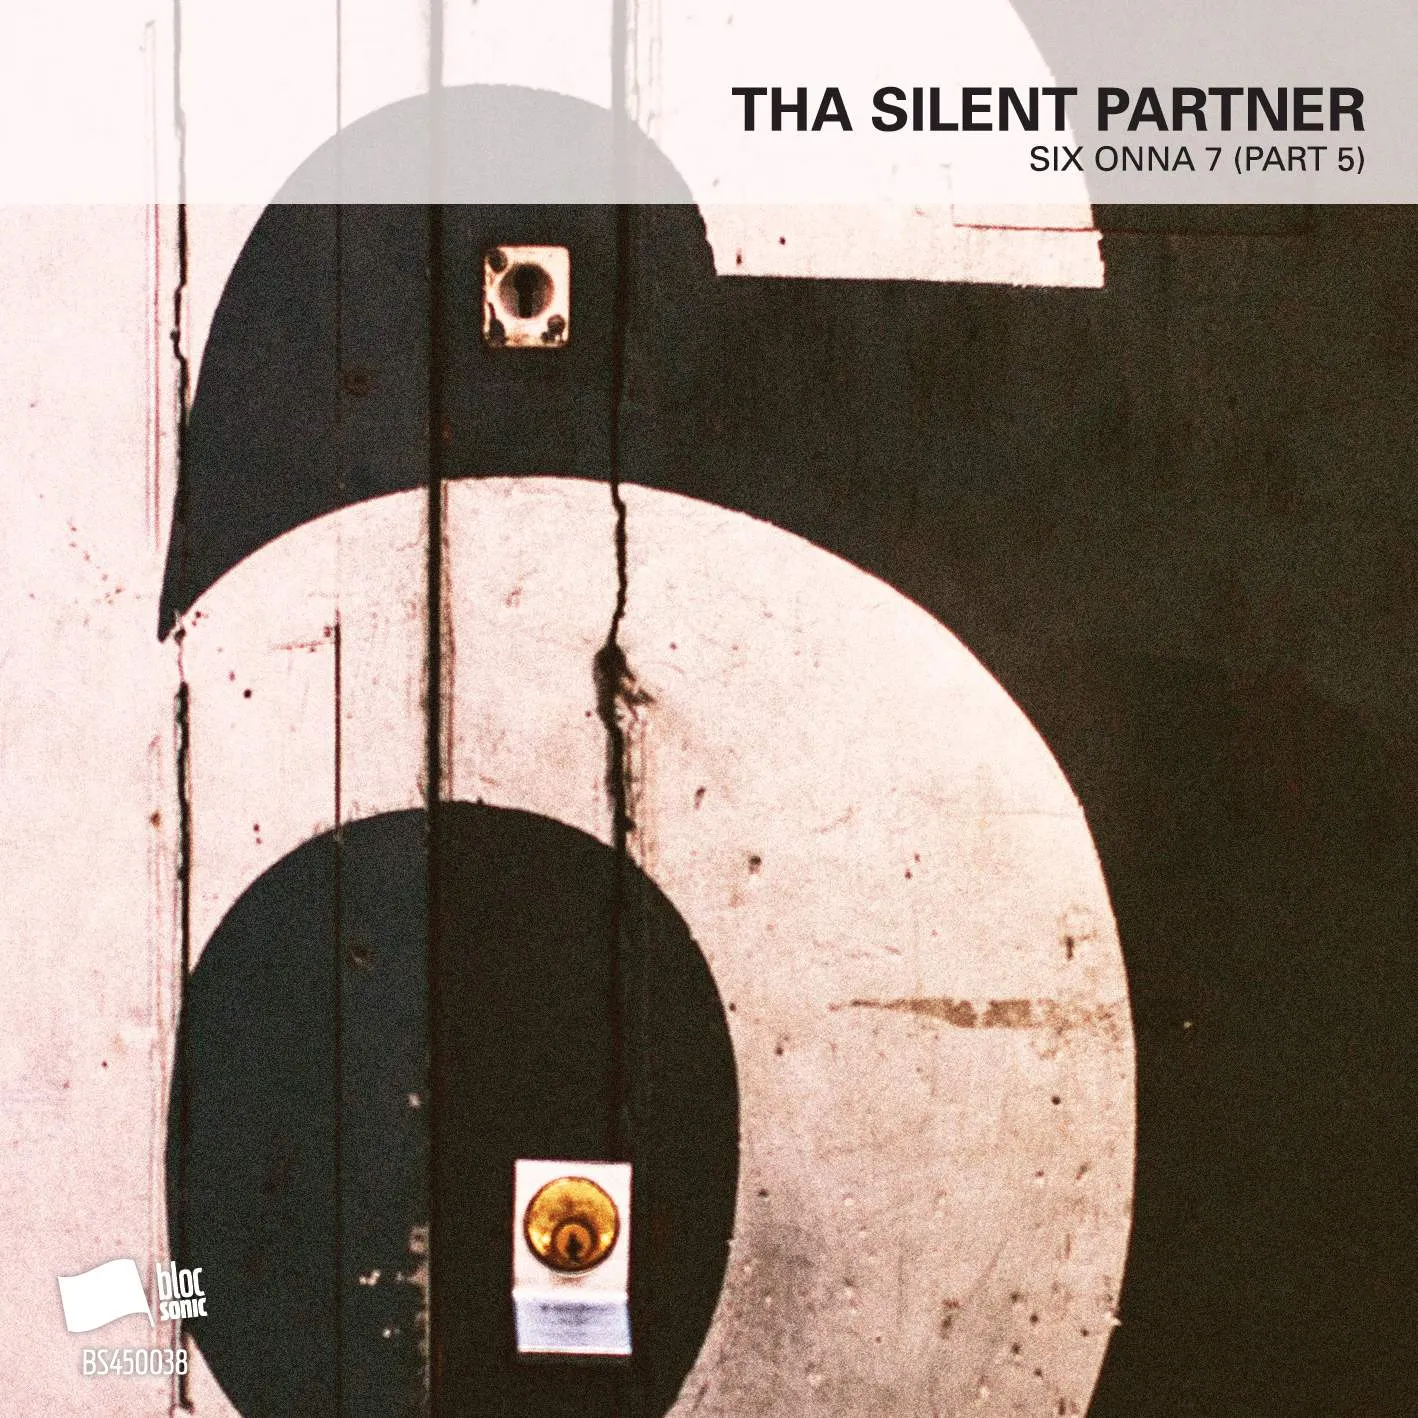 Tha Silent Partner - SIX ONNA 7 (Part 5)